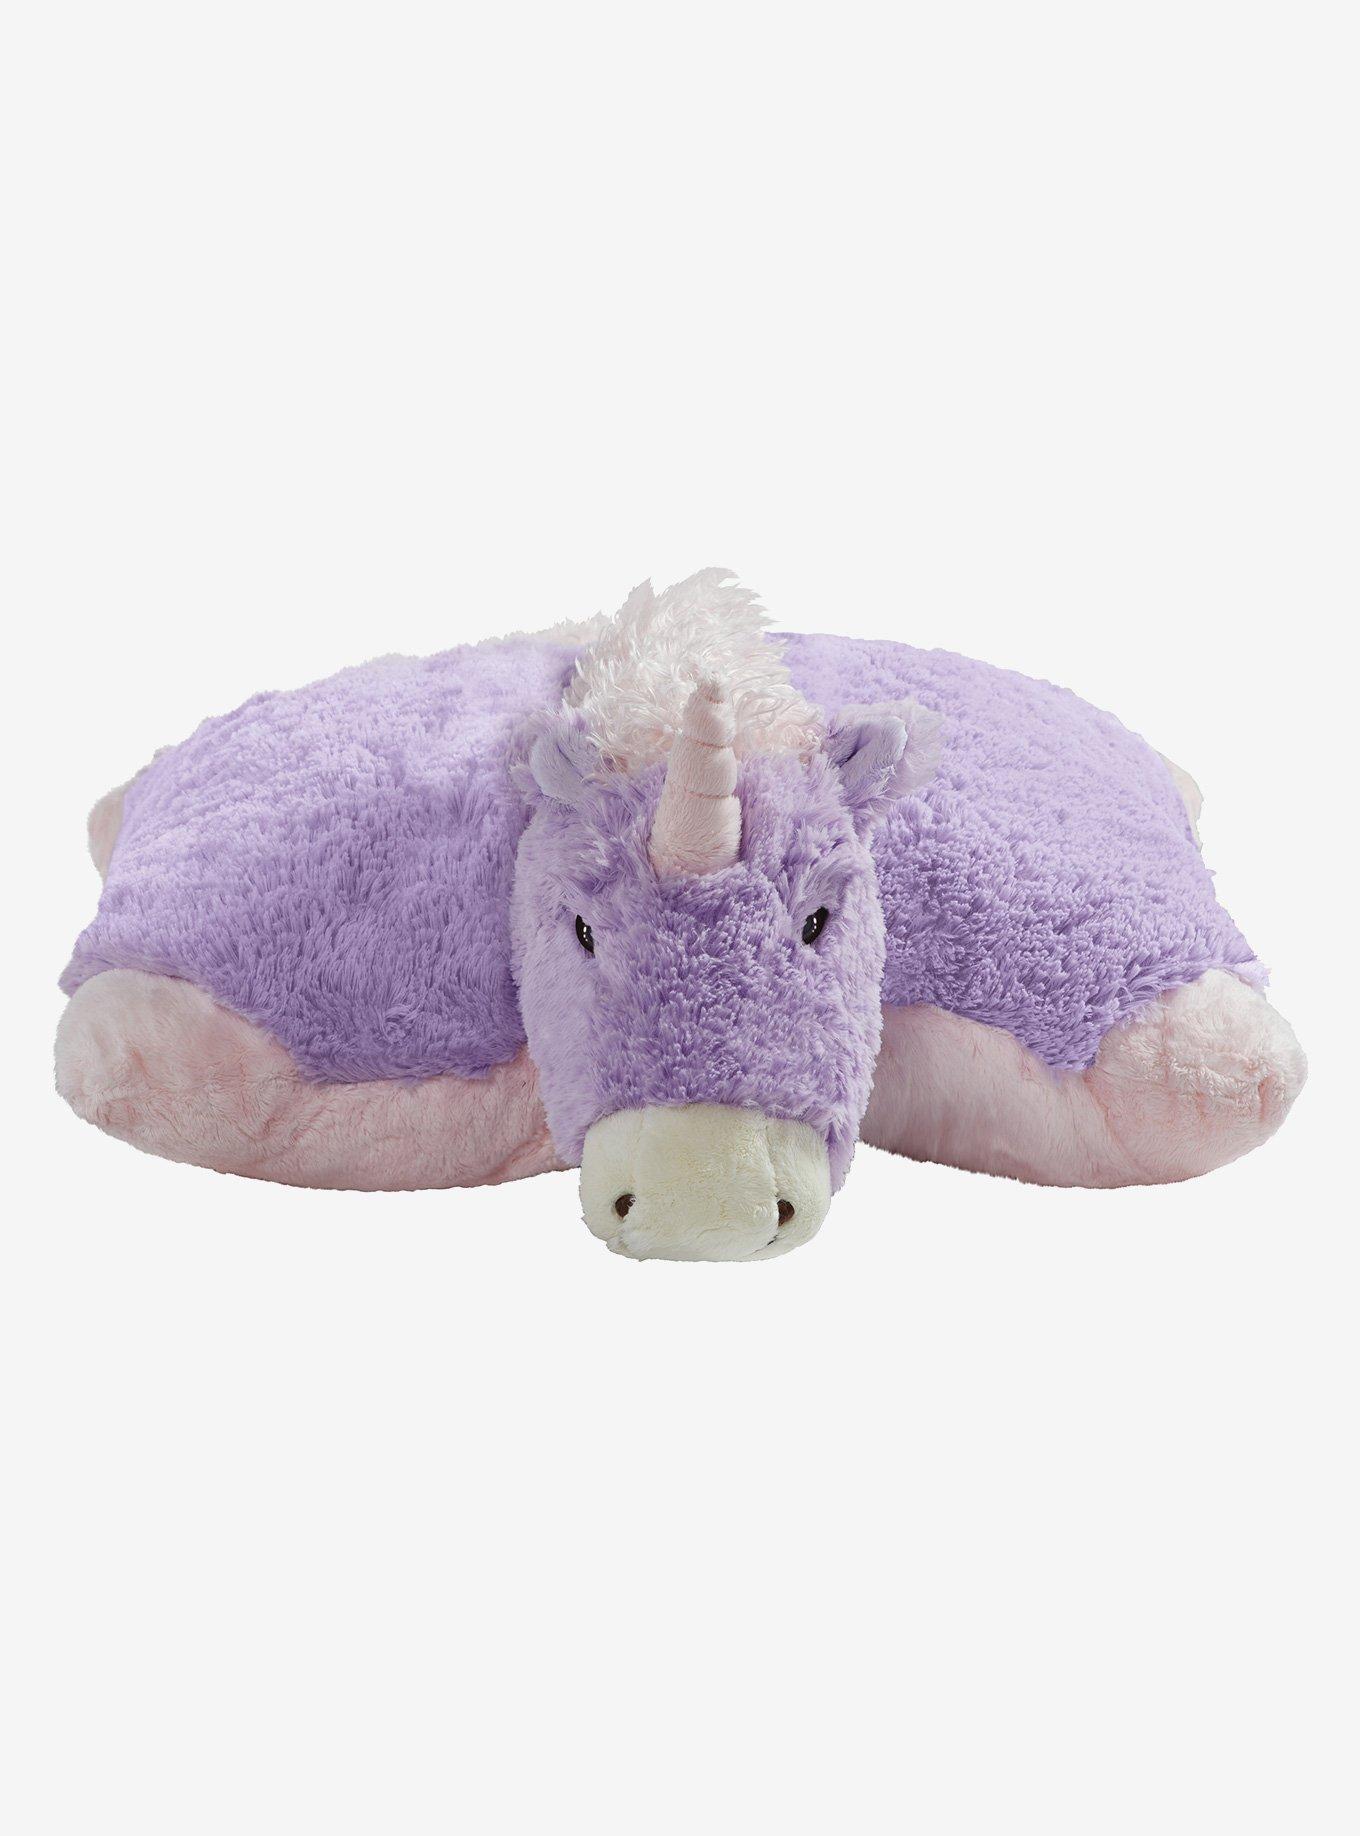 Magical Unicorn Pillow Pets Plush Toy